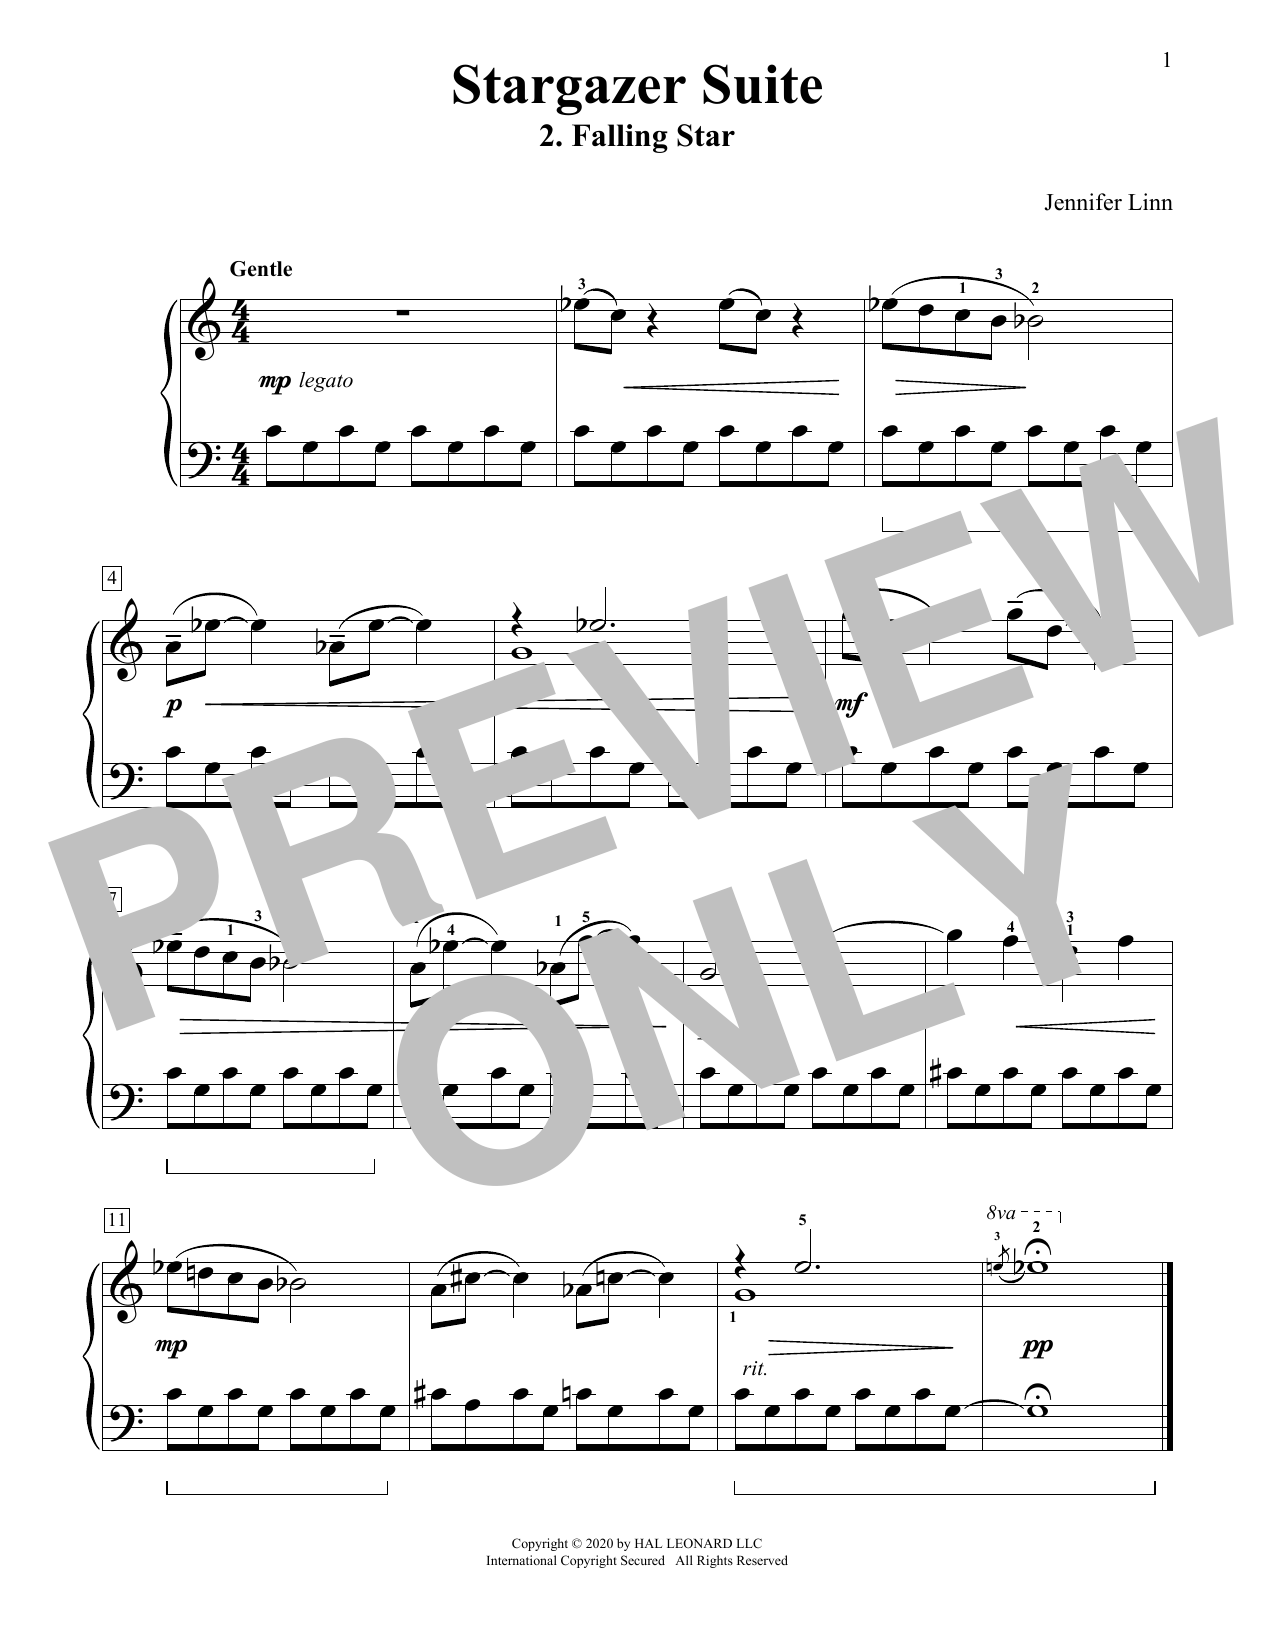 Jennifer Linn Stargazer Suite: 2. Falling Star Sheet Music Notes & Chords for Educational Piano - Download or Print PDF